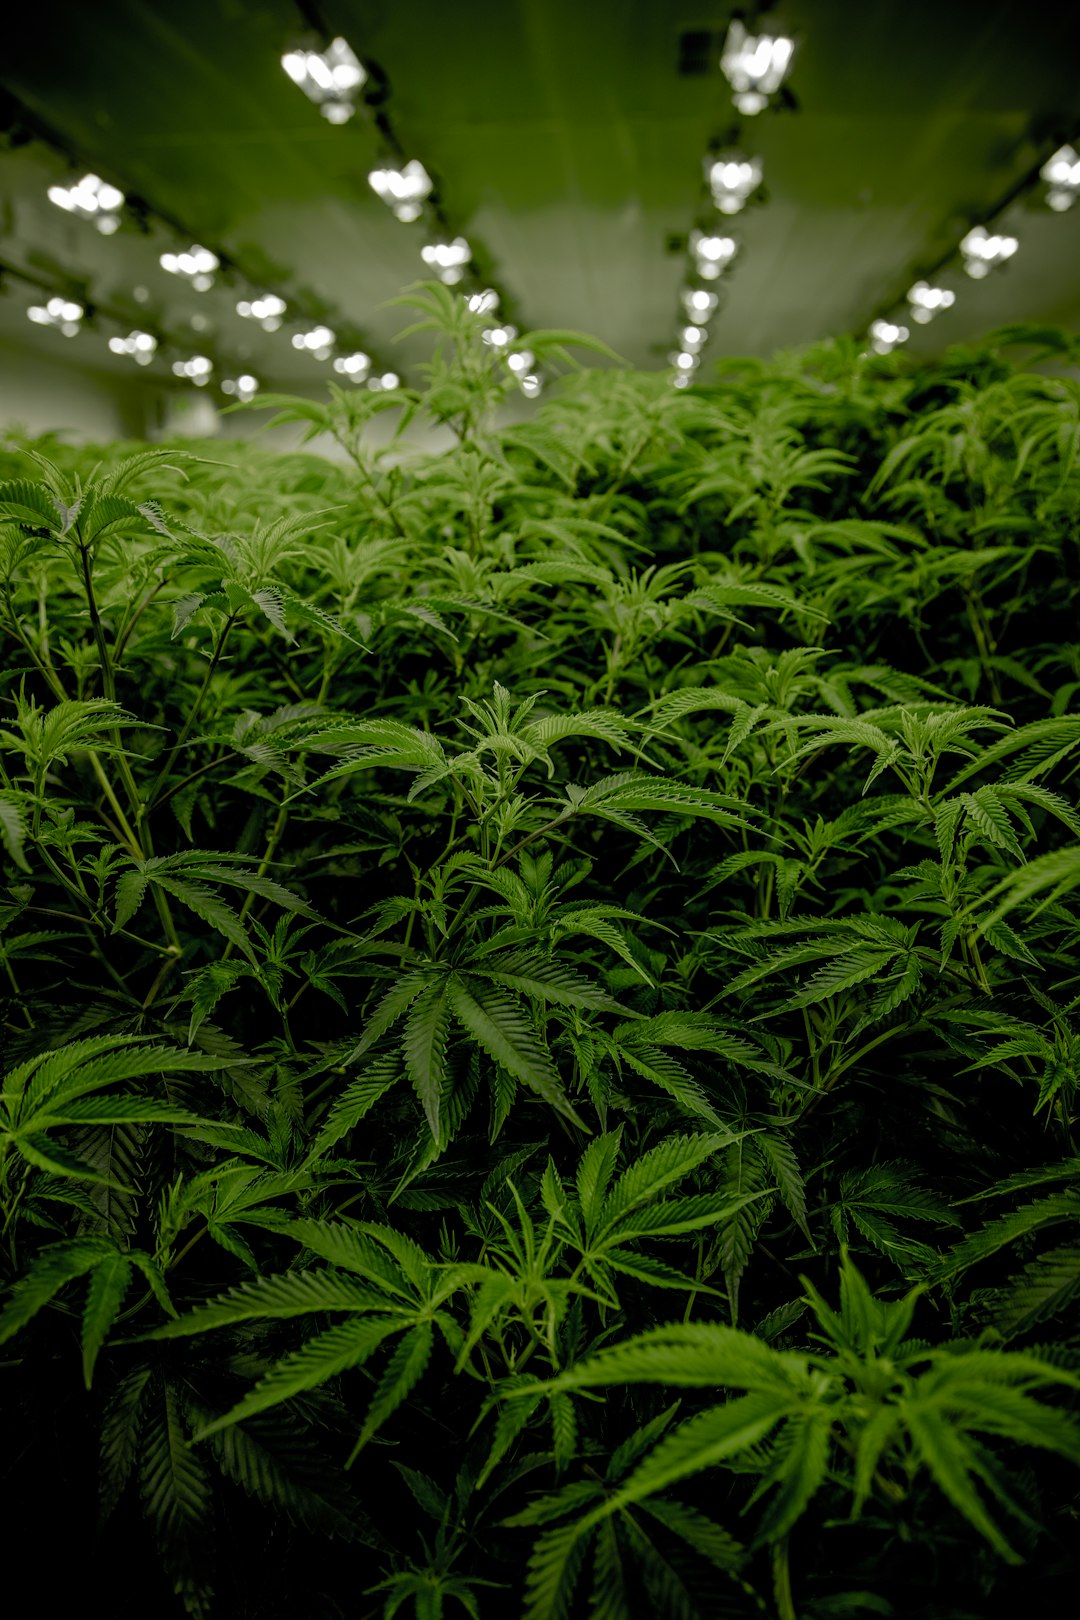 America and the Legalization of Marijuana